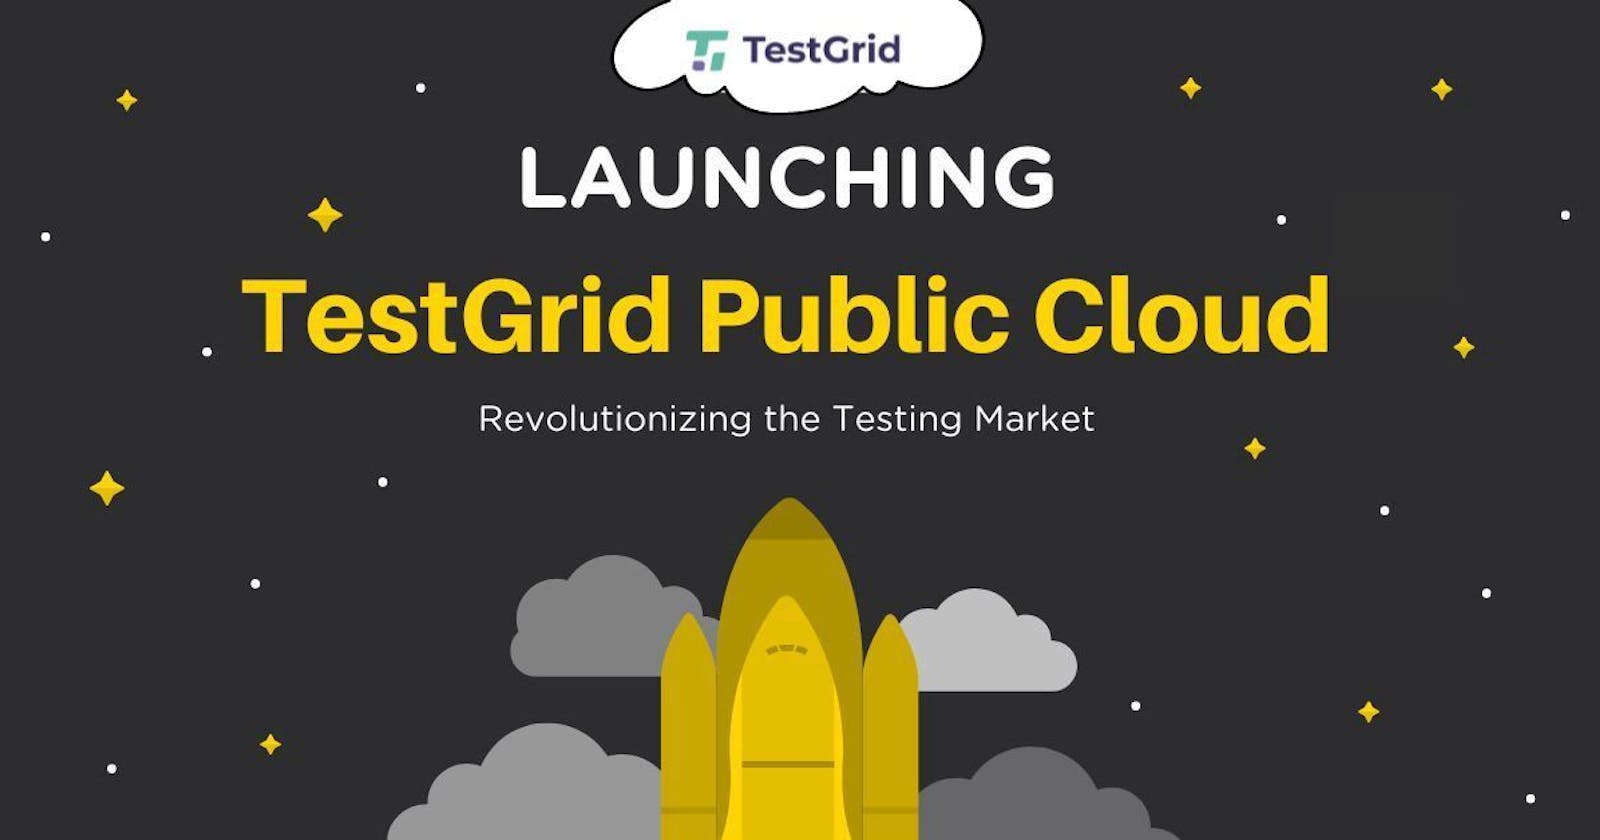 Launching TestGrid Public Cloud to Revolutionize the Testing Market